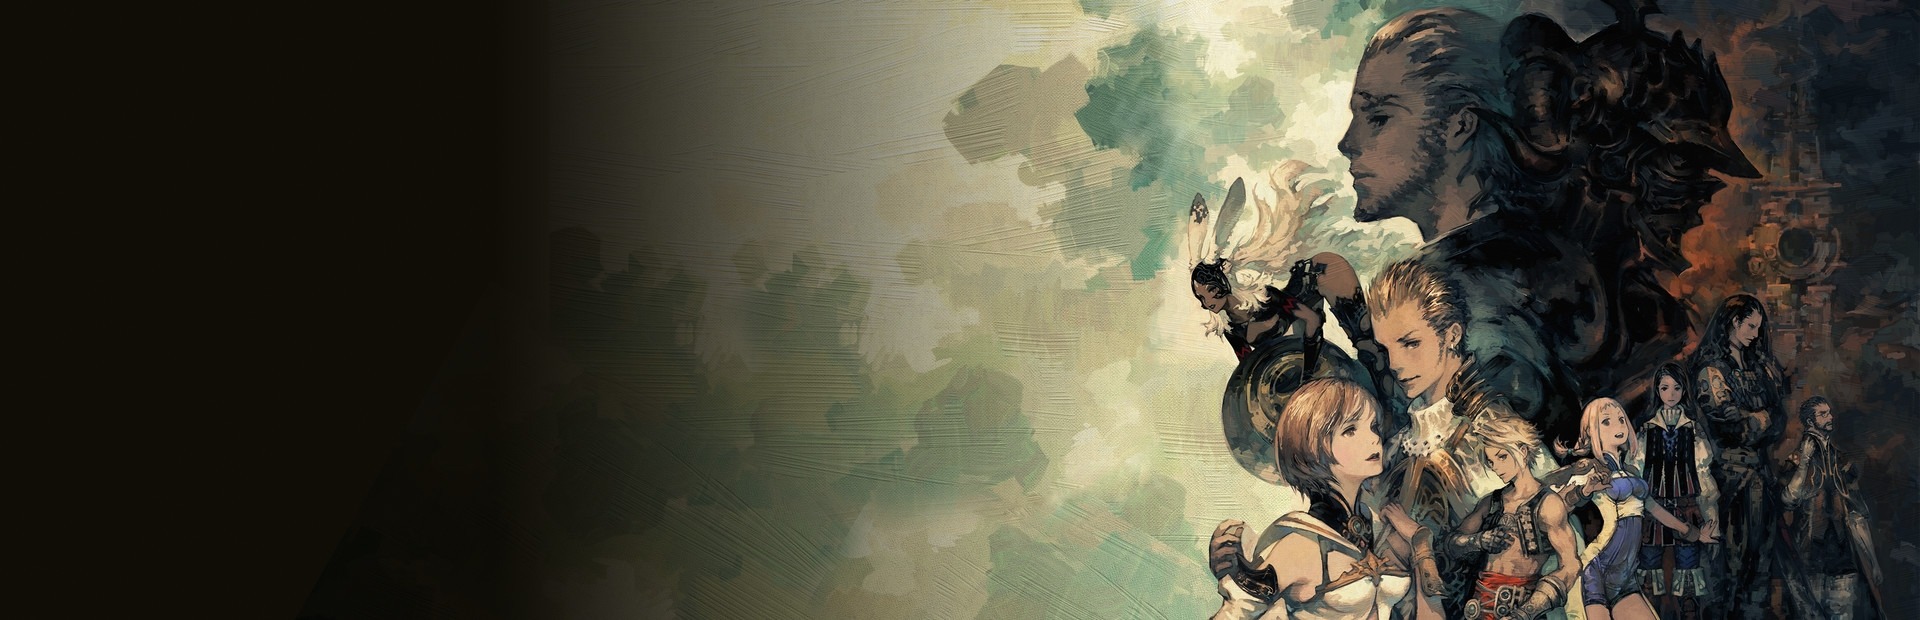 Banner Final Fantasy XII: The Zodiac Age